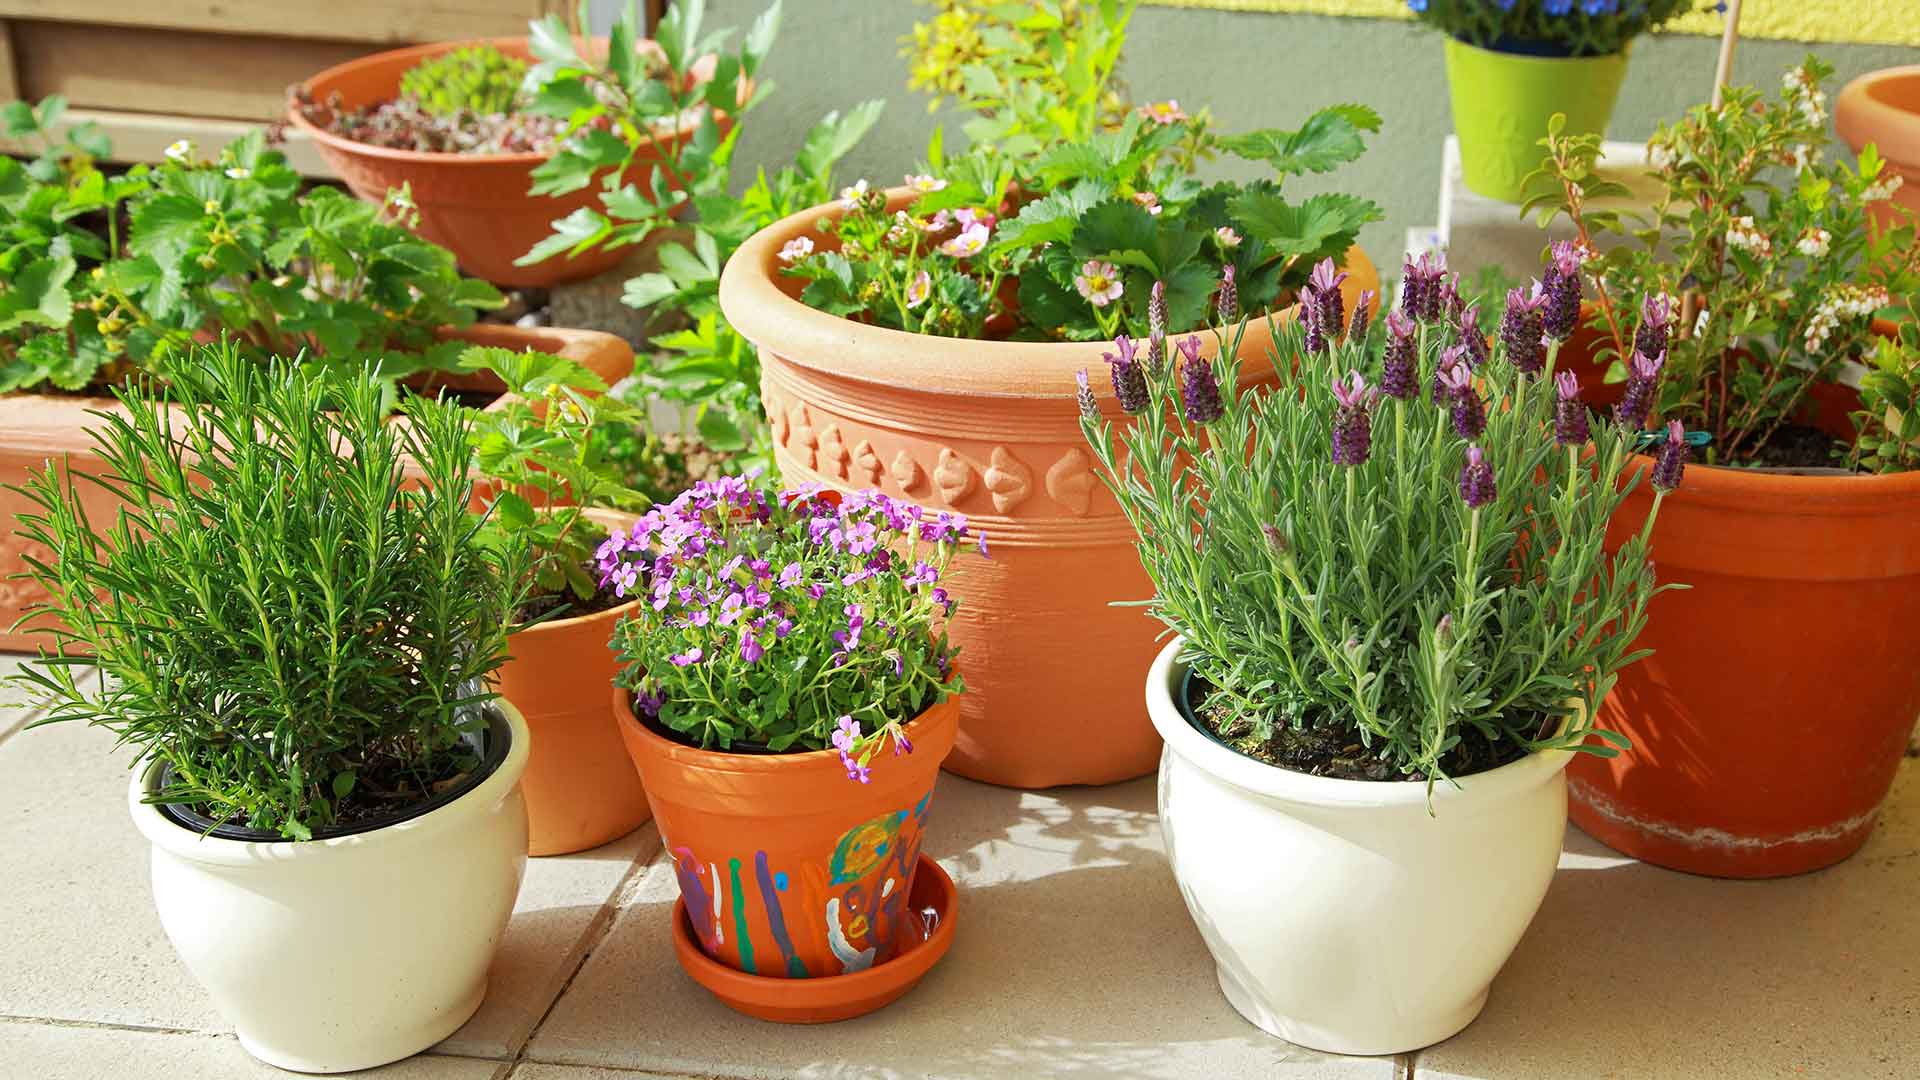 7 Piece//Set Miniature Flower Pot for Landscape Home Garden Decor Newest Useful